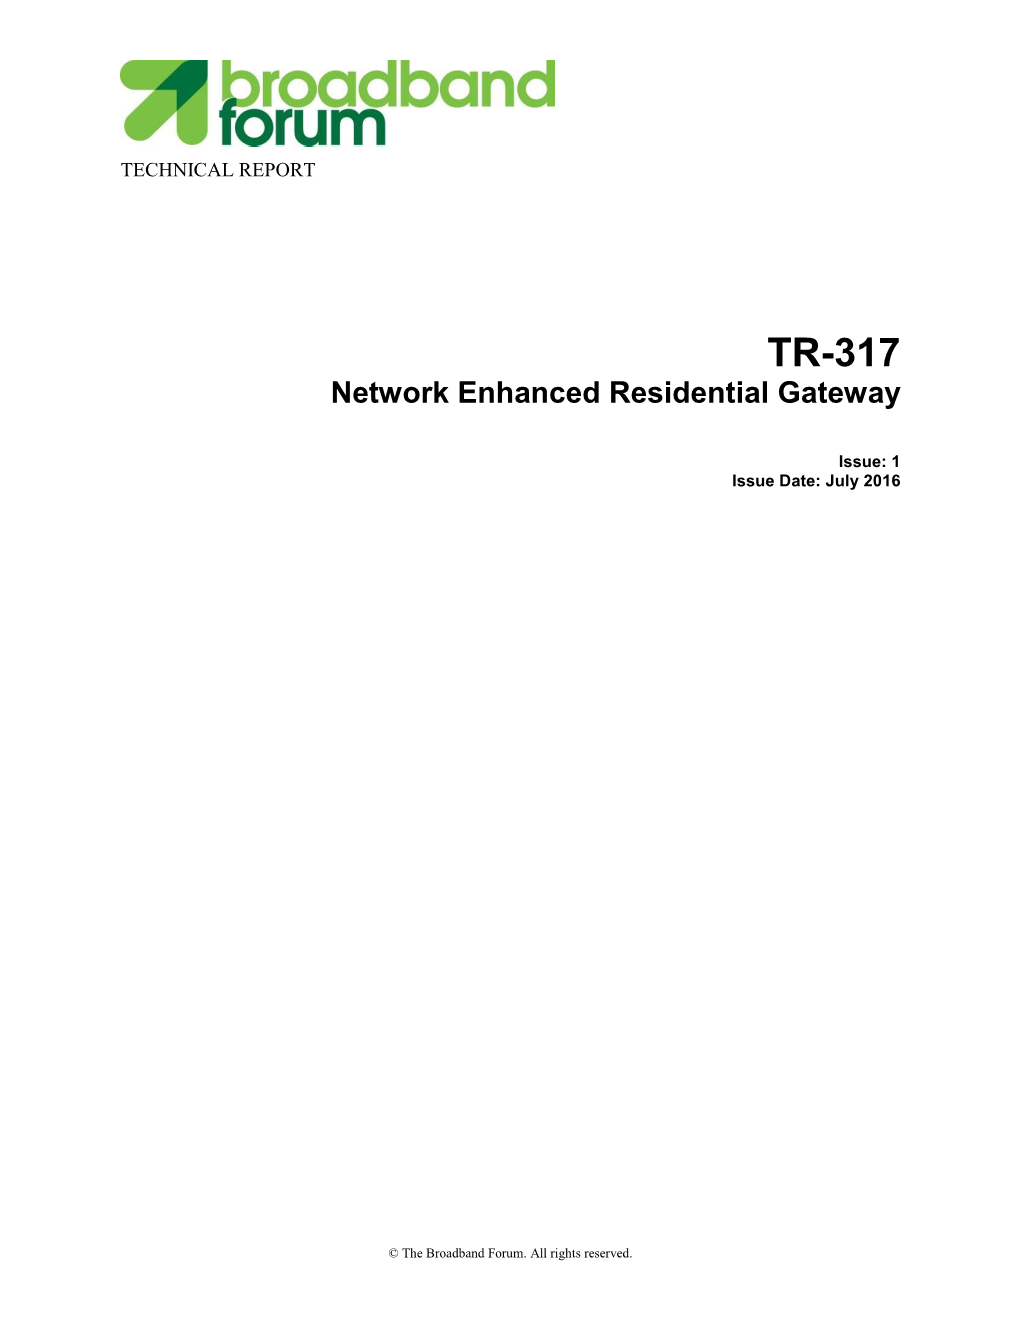 TR-317 Network Enhanced Residential Gateway